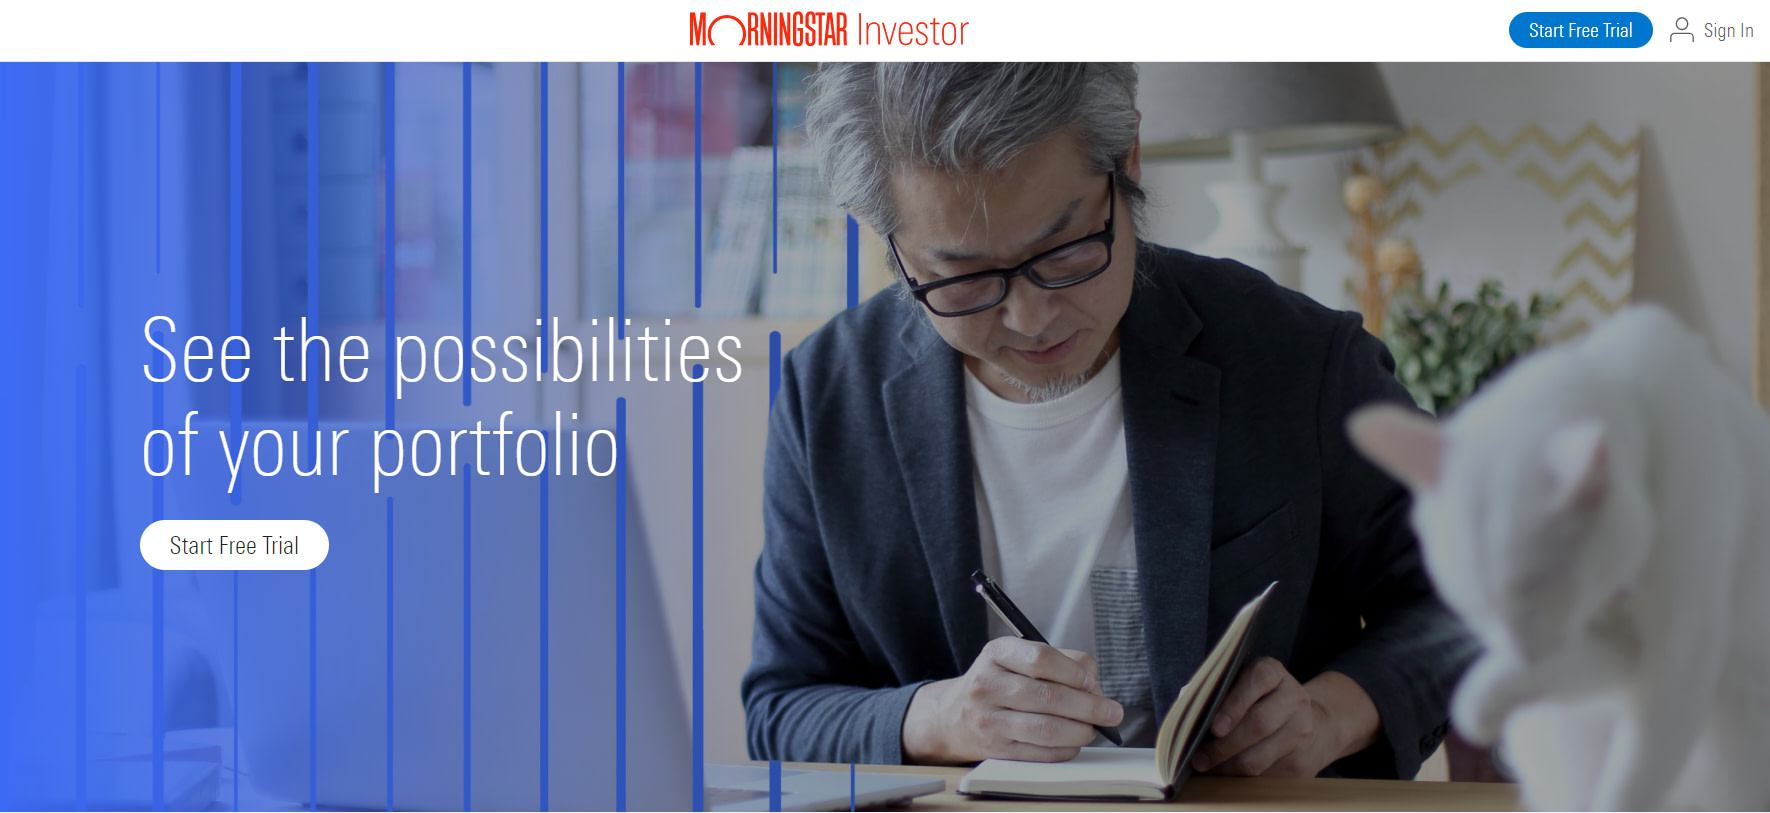 Best portfolio analysis tools: Morningstar Investor homepage